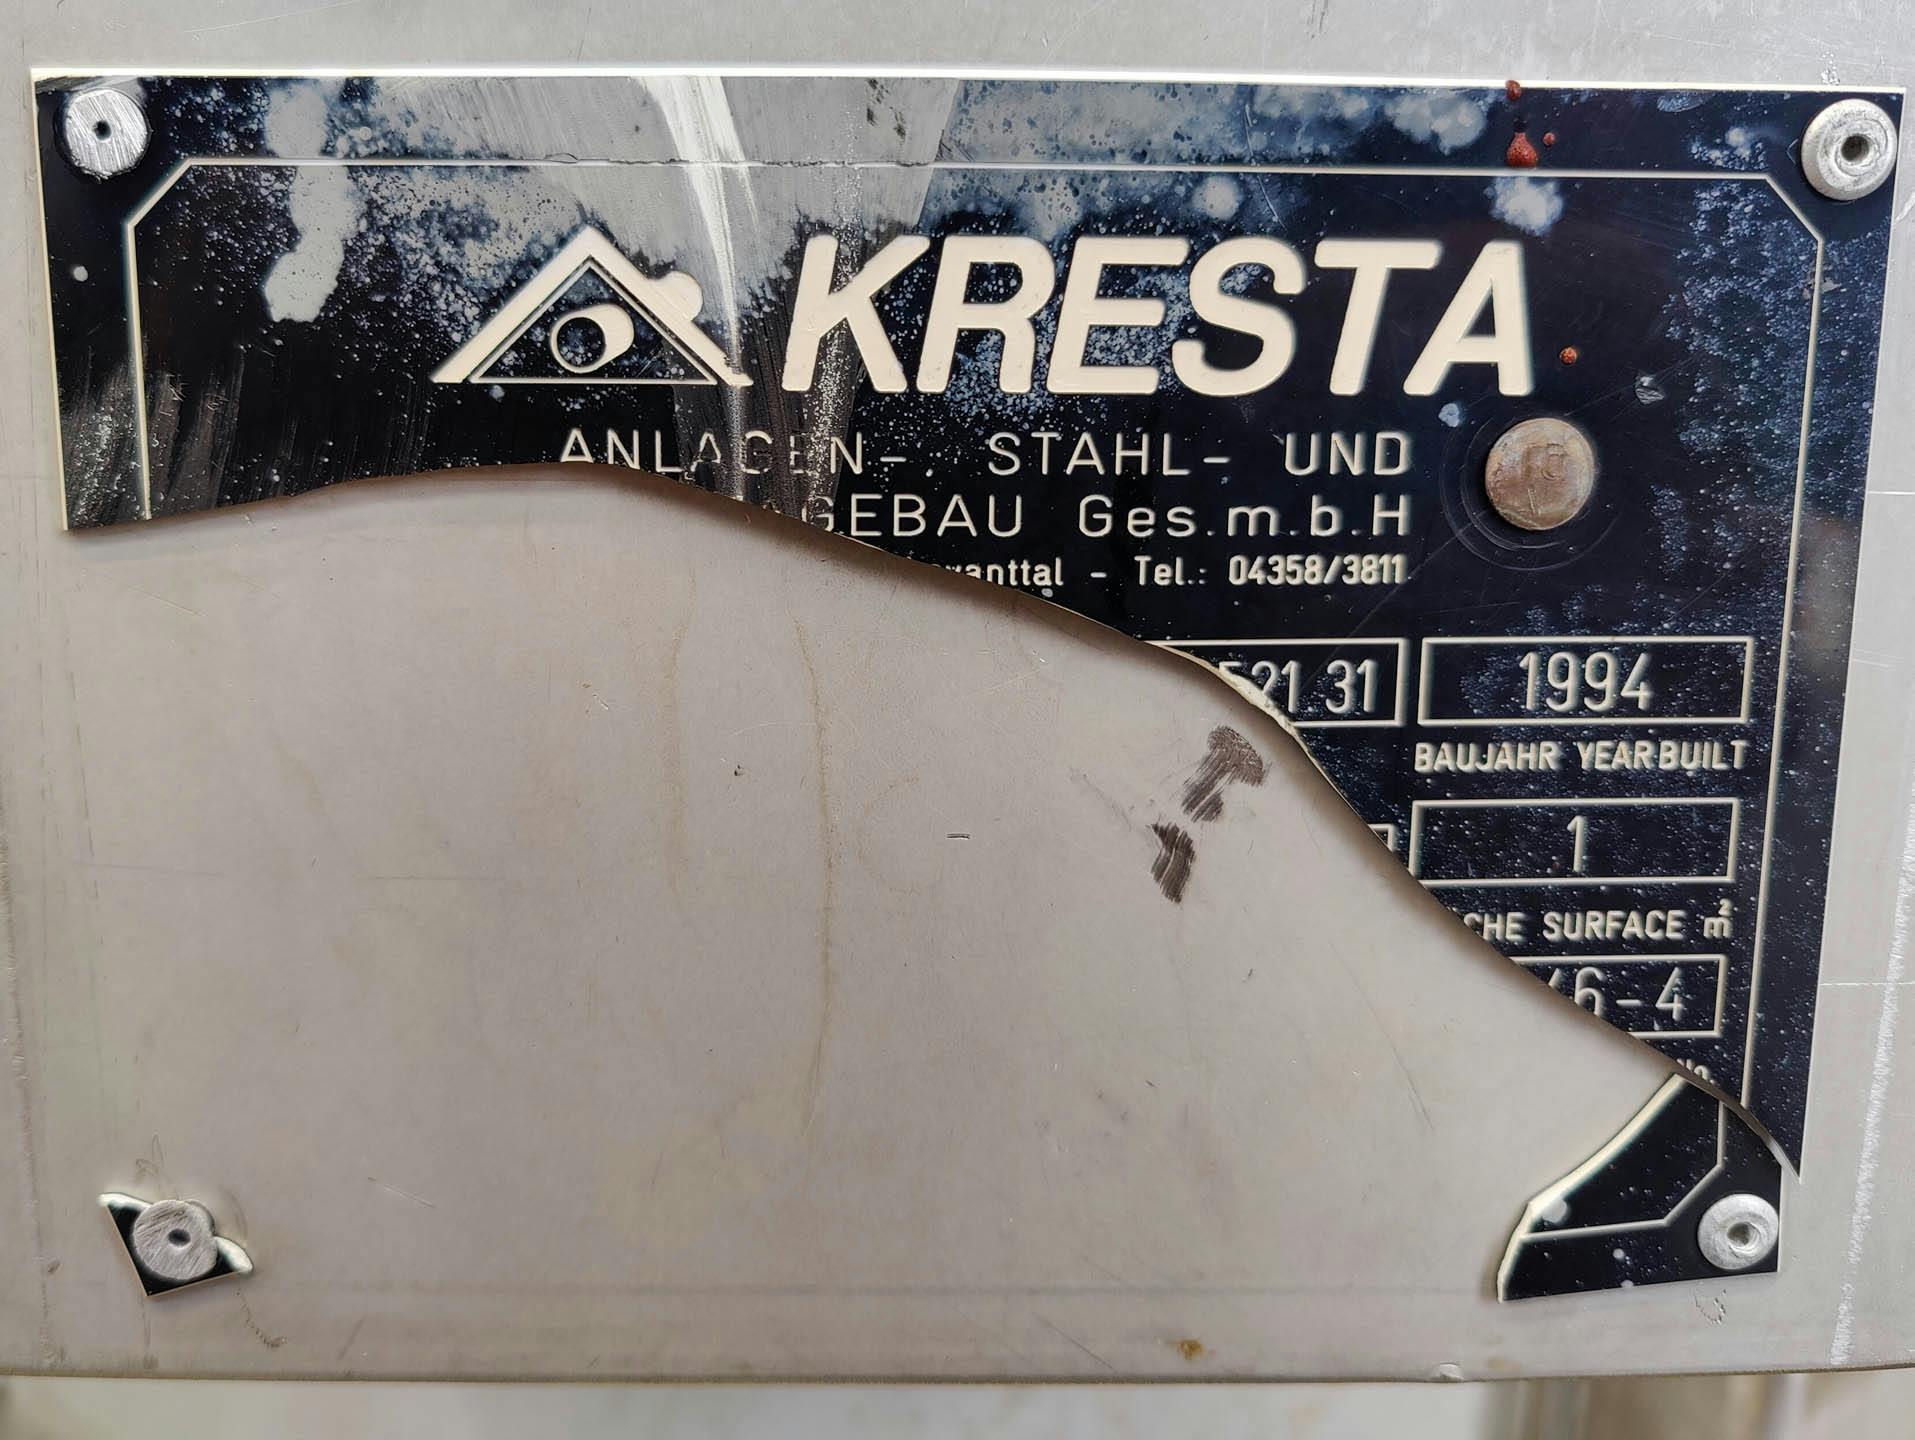 Kresta 250 Ltr. - Zbiornik ciśnieniowy - image 7